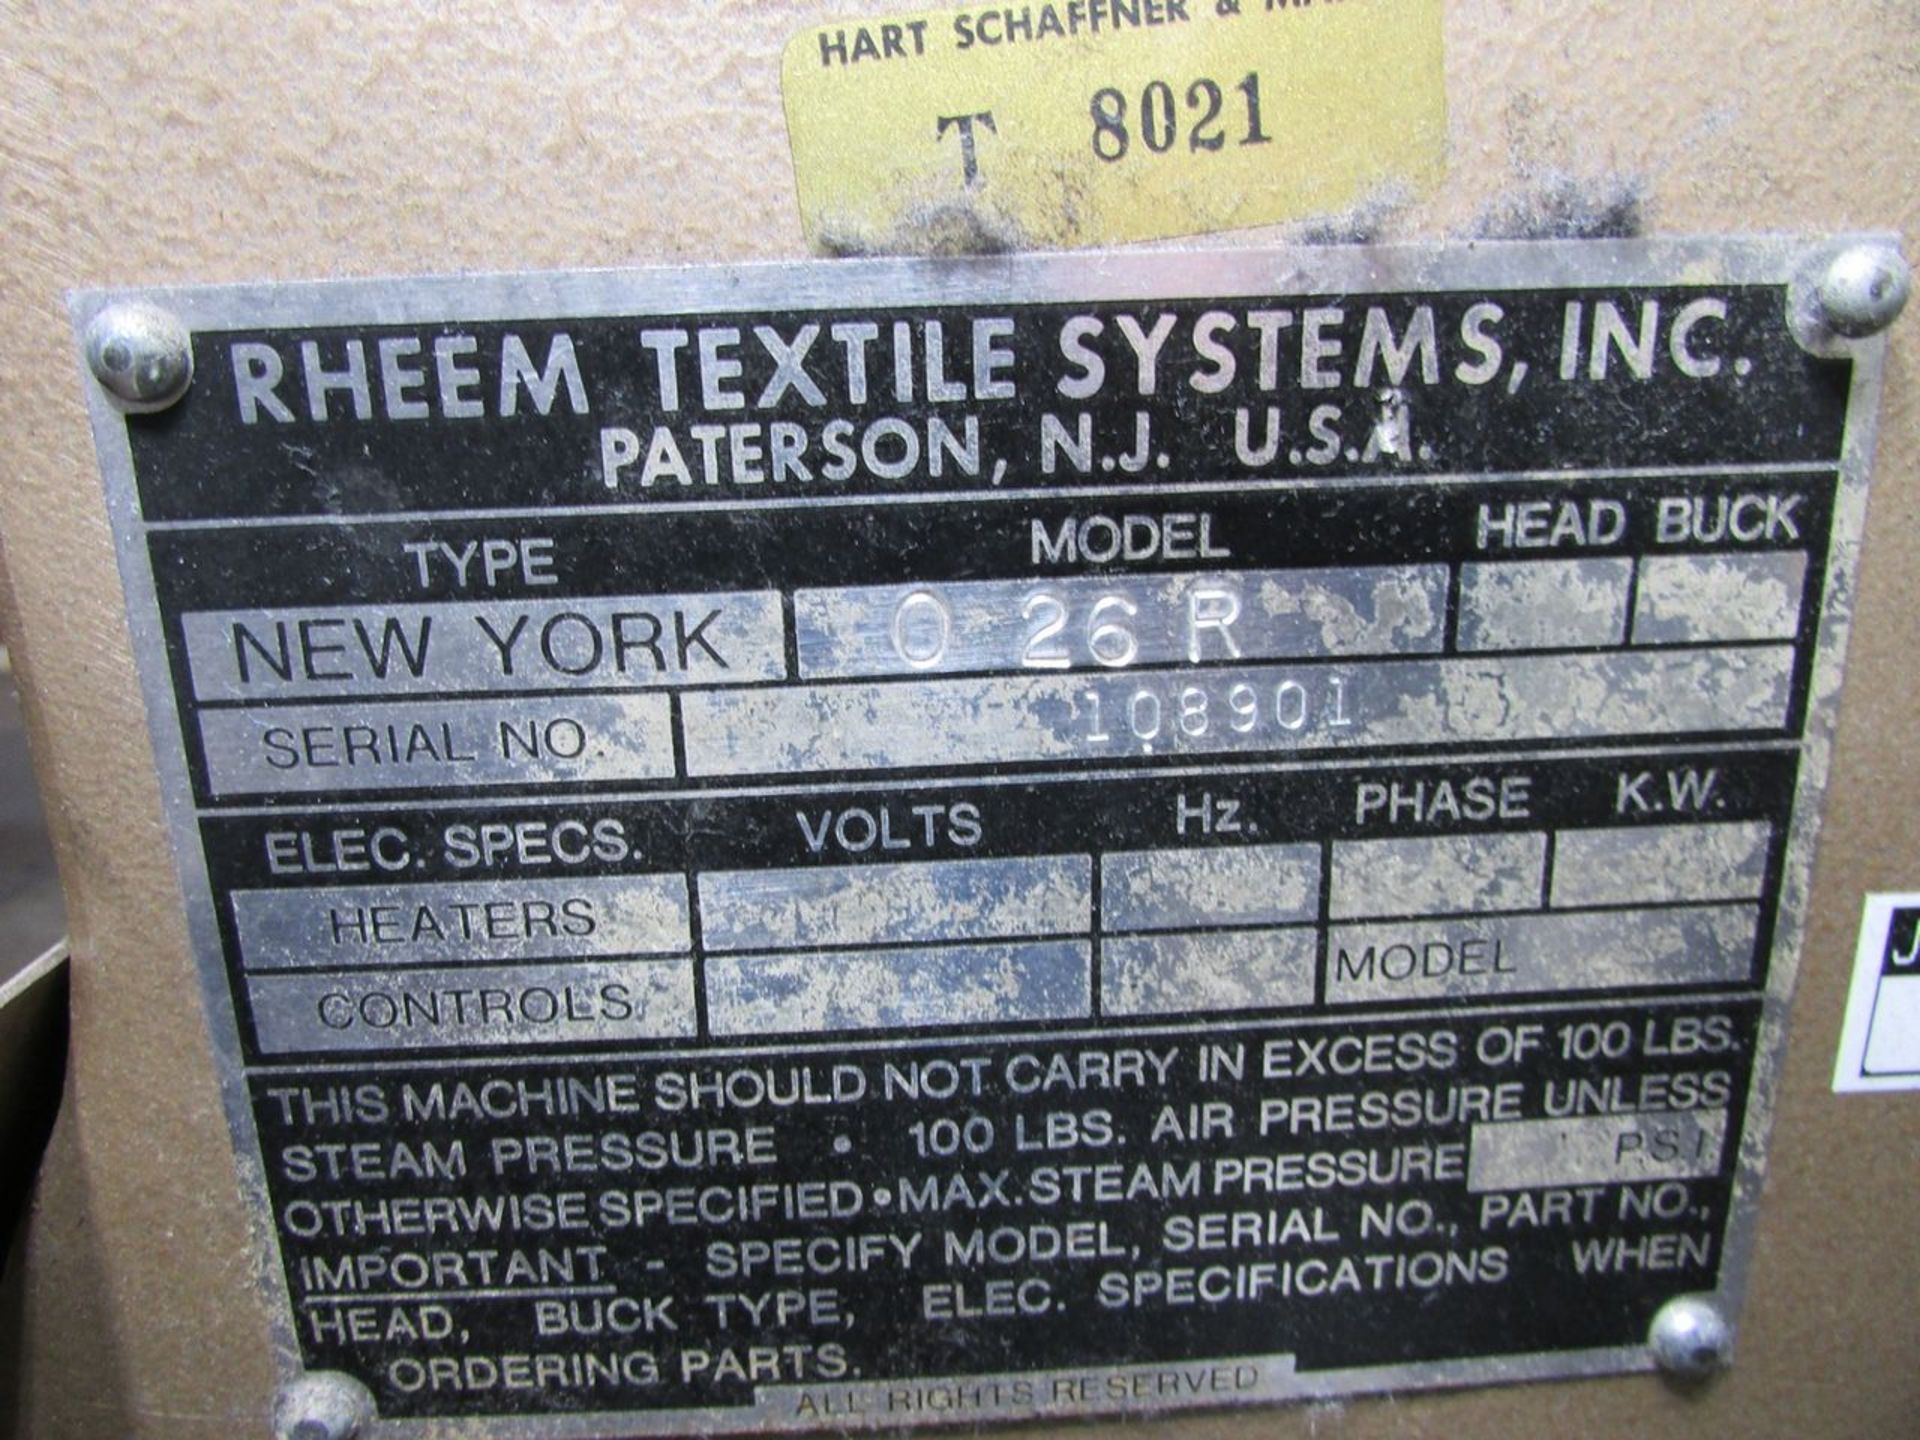 Rheem New York Model 0-26-R (S/N: 108901) Dart Press - Image 7 of 7